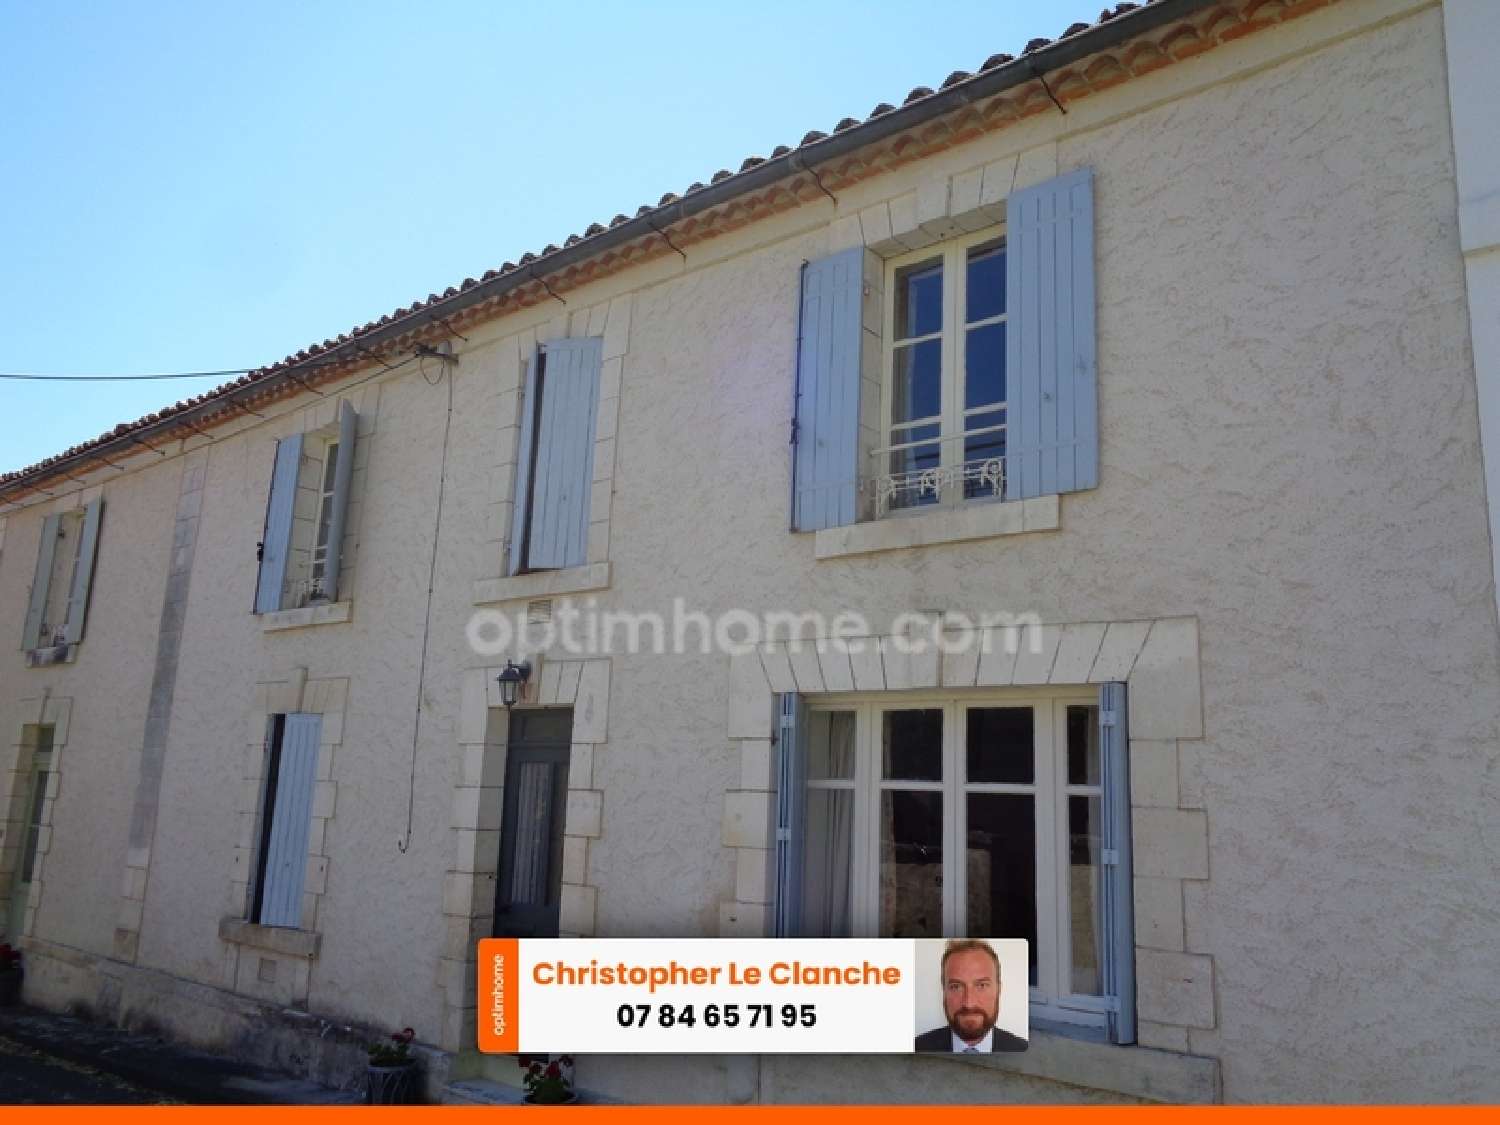  for sale village house Pillac Charente 2